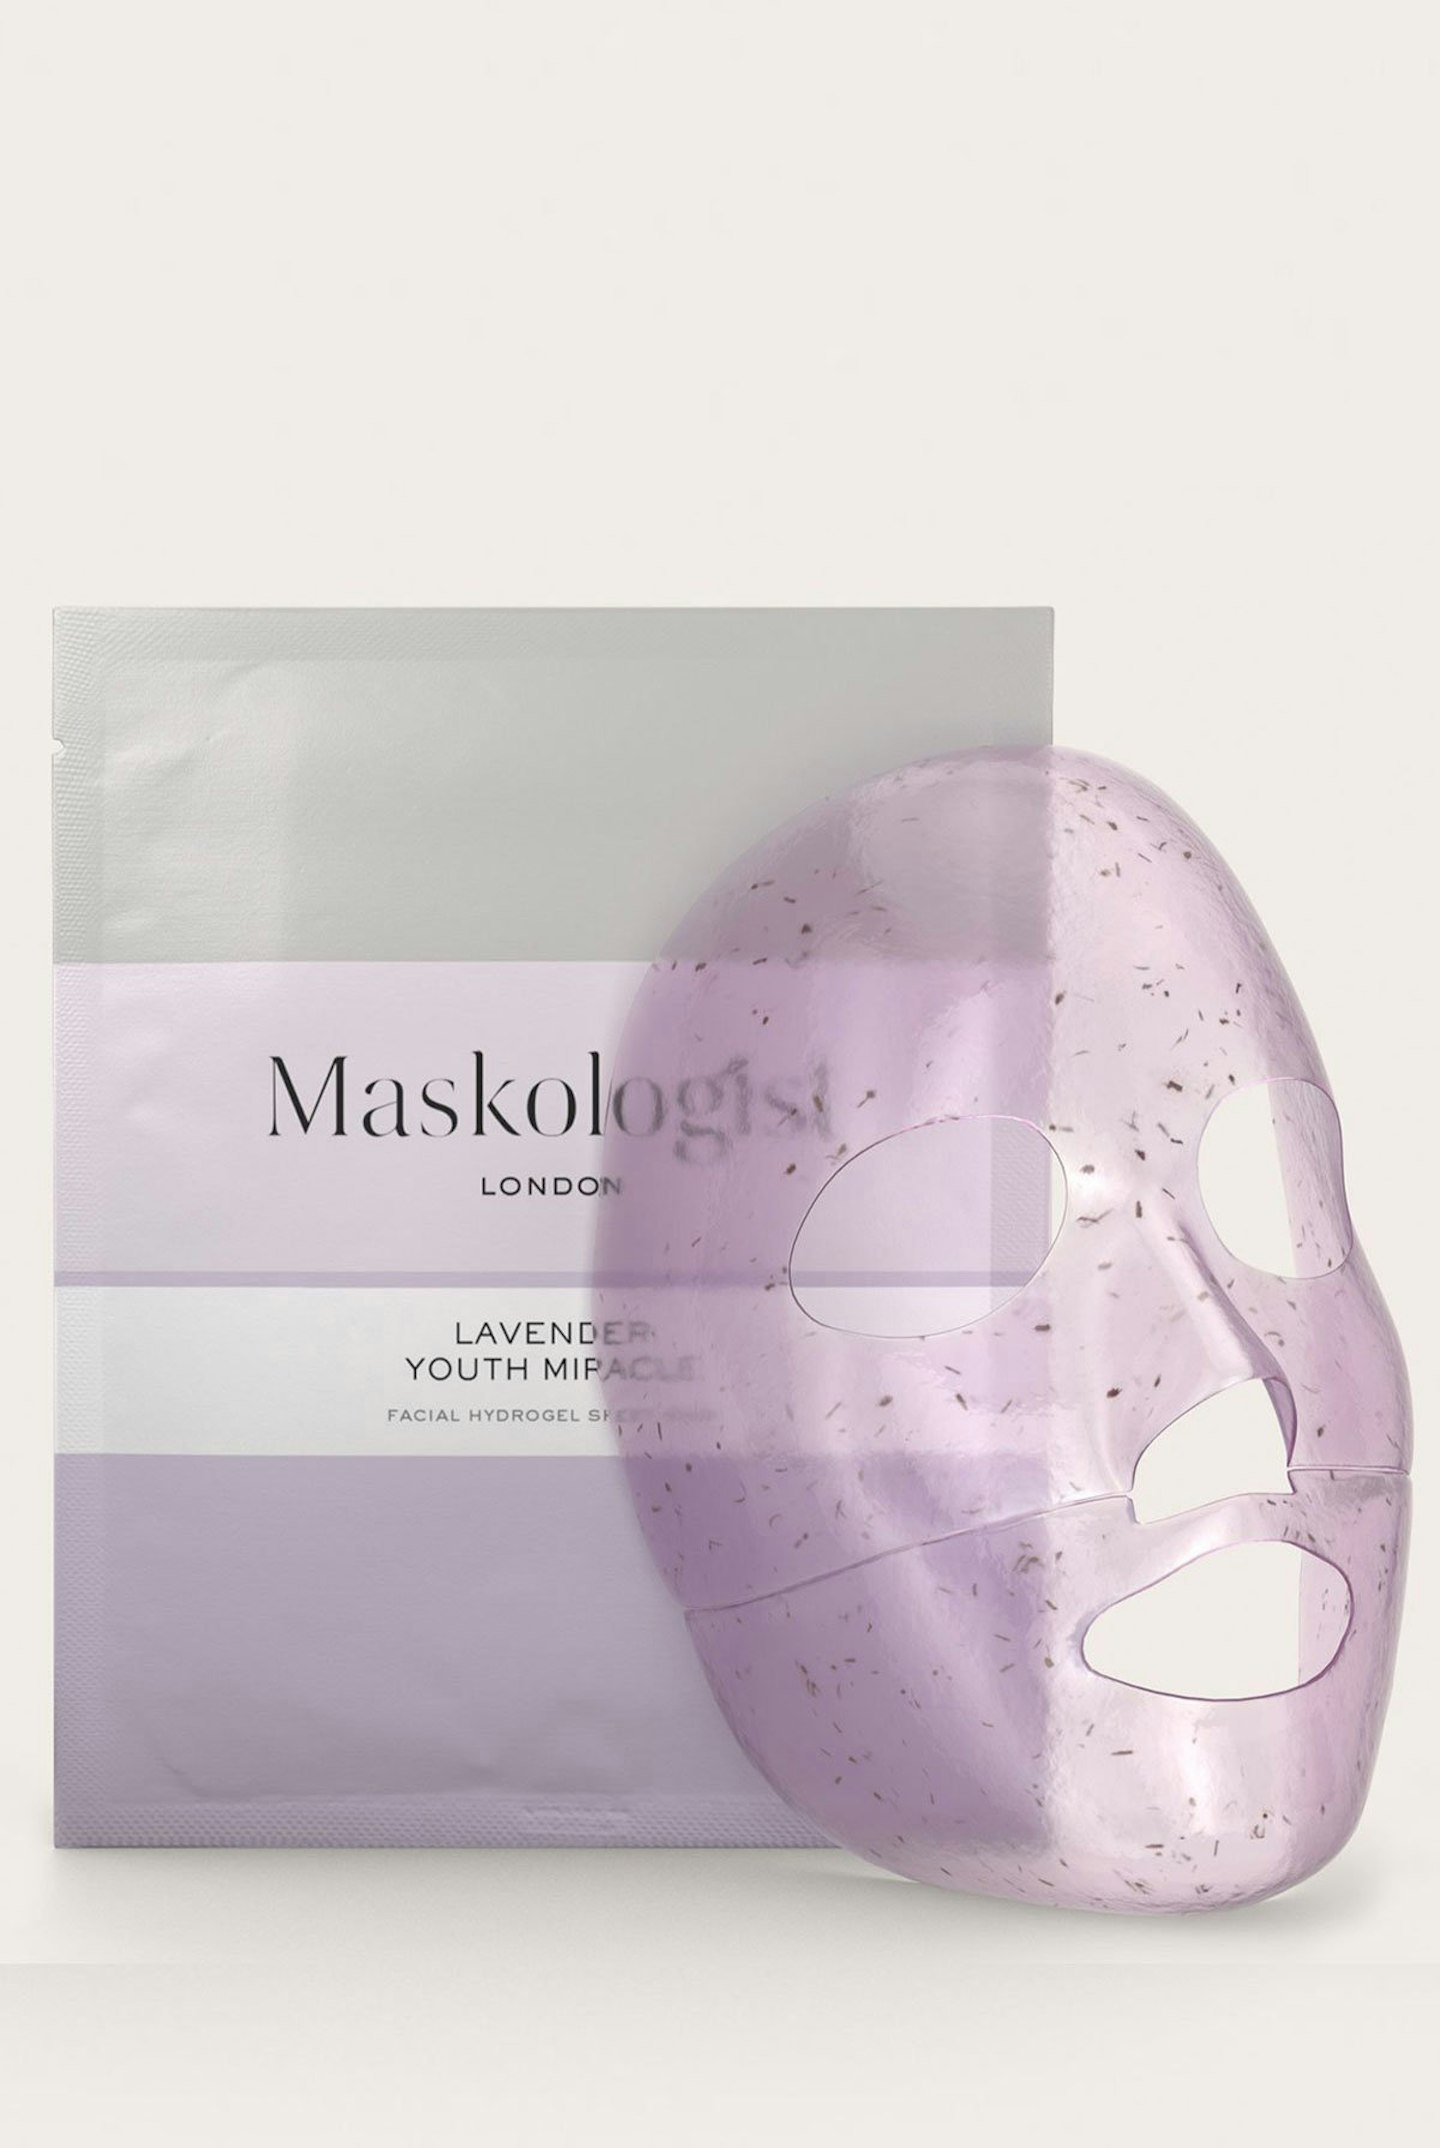 Maskologist, The Lavender Youth Miracle Mask, £84.50 for 4 masks